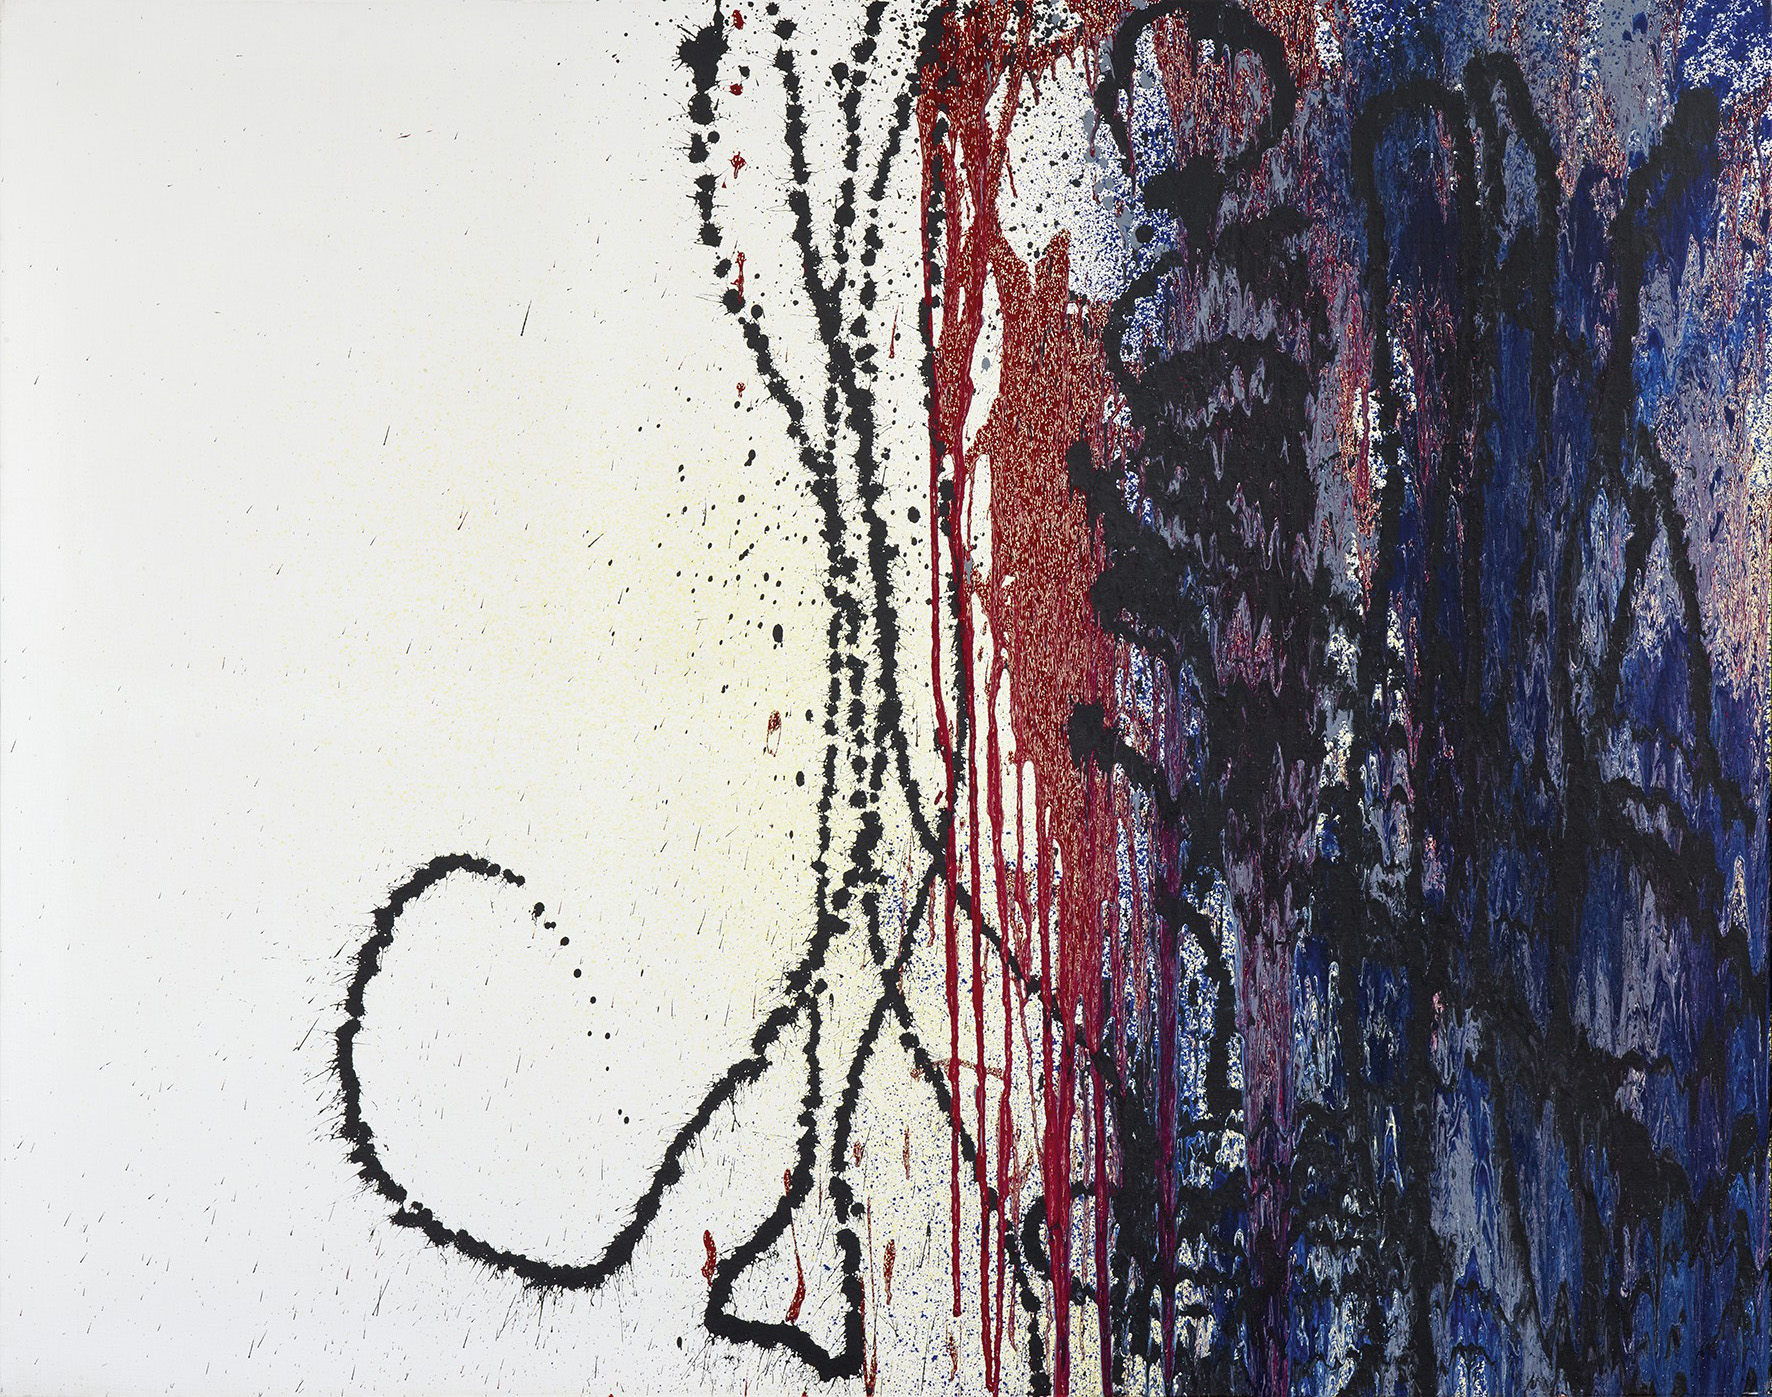 Hans Hartung, T1988-E40, 1988, acrylic on canvas, 142 x 180 cm, estimate € 90,000 – 120,000